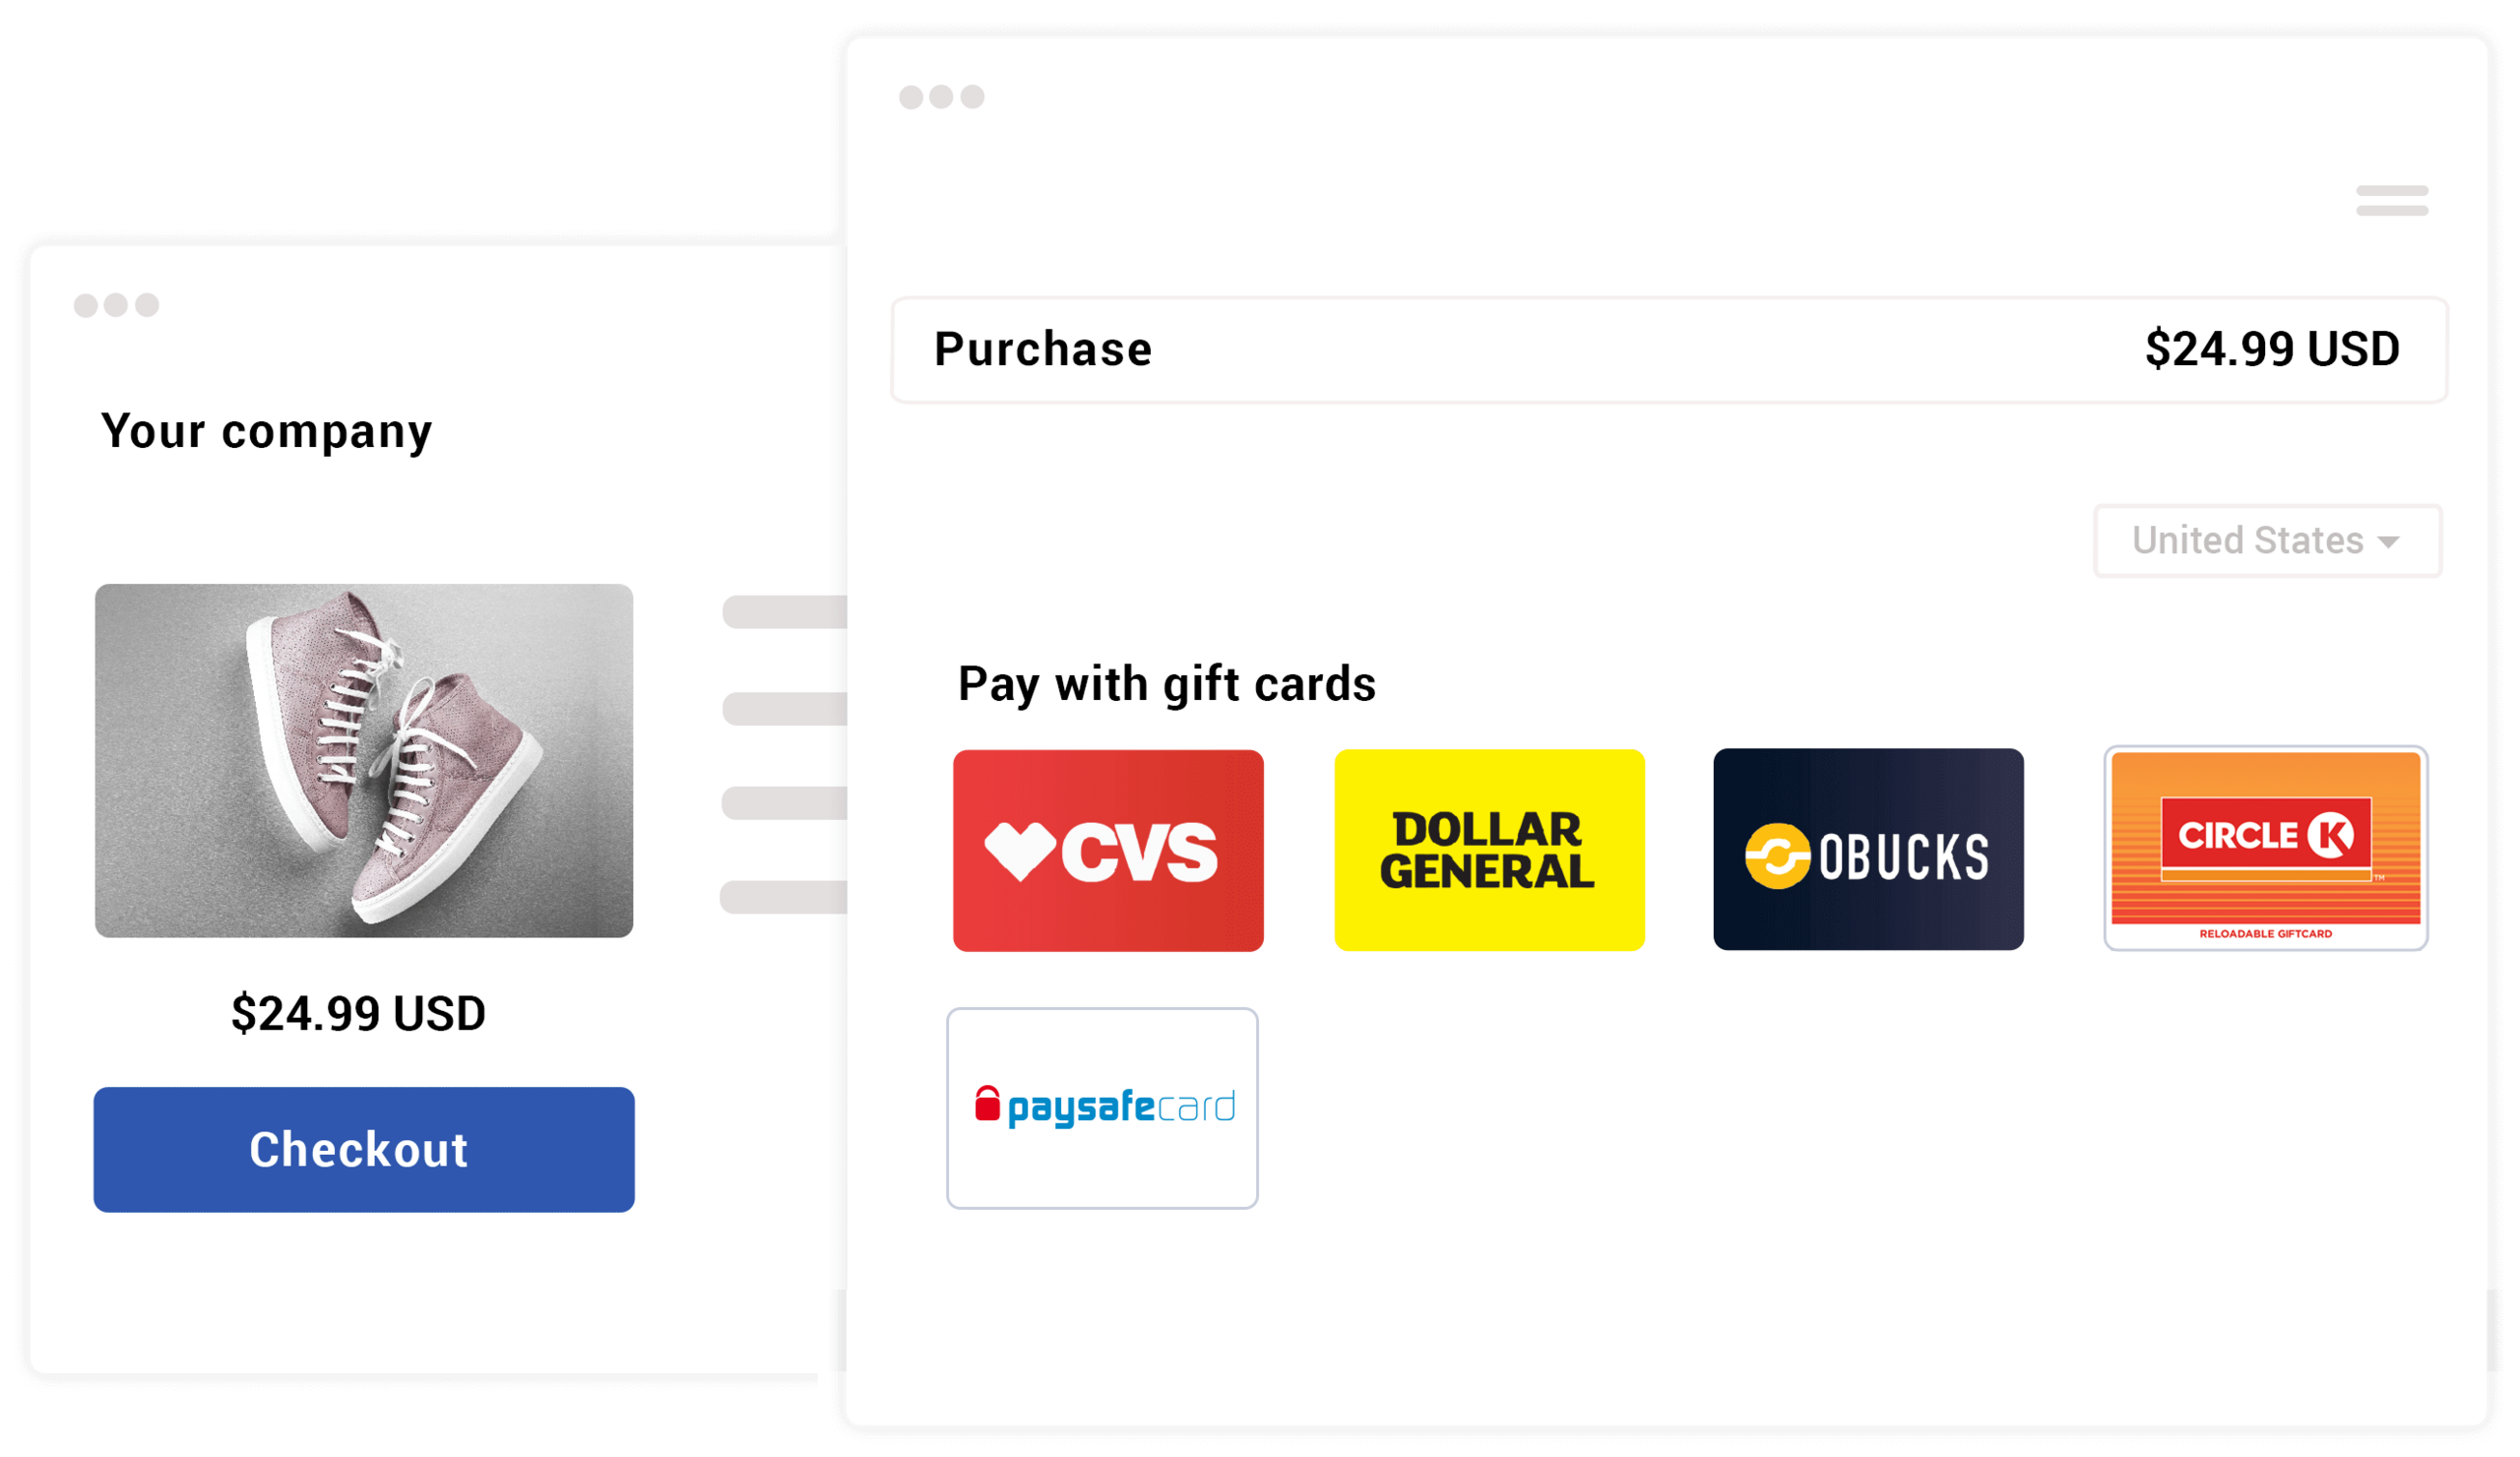 Payment Platform